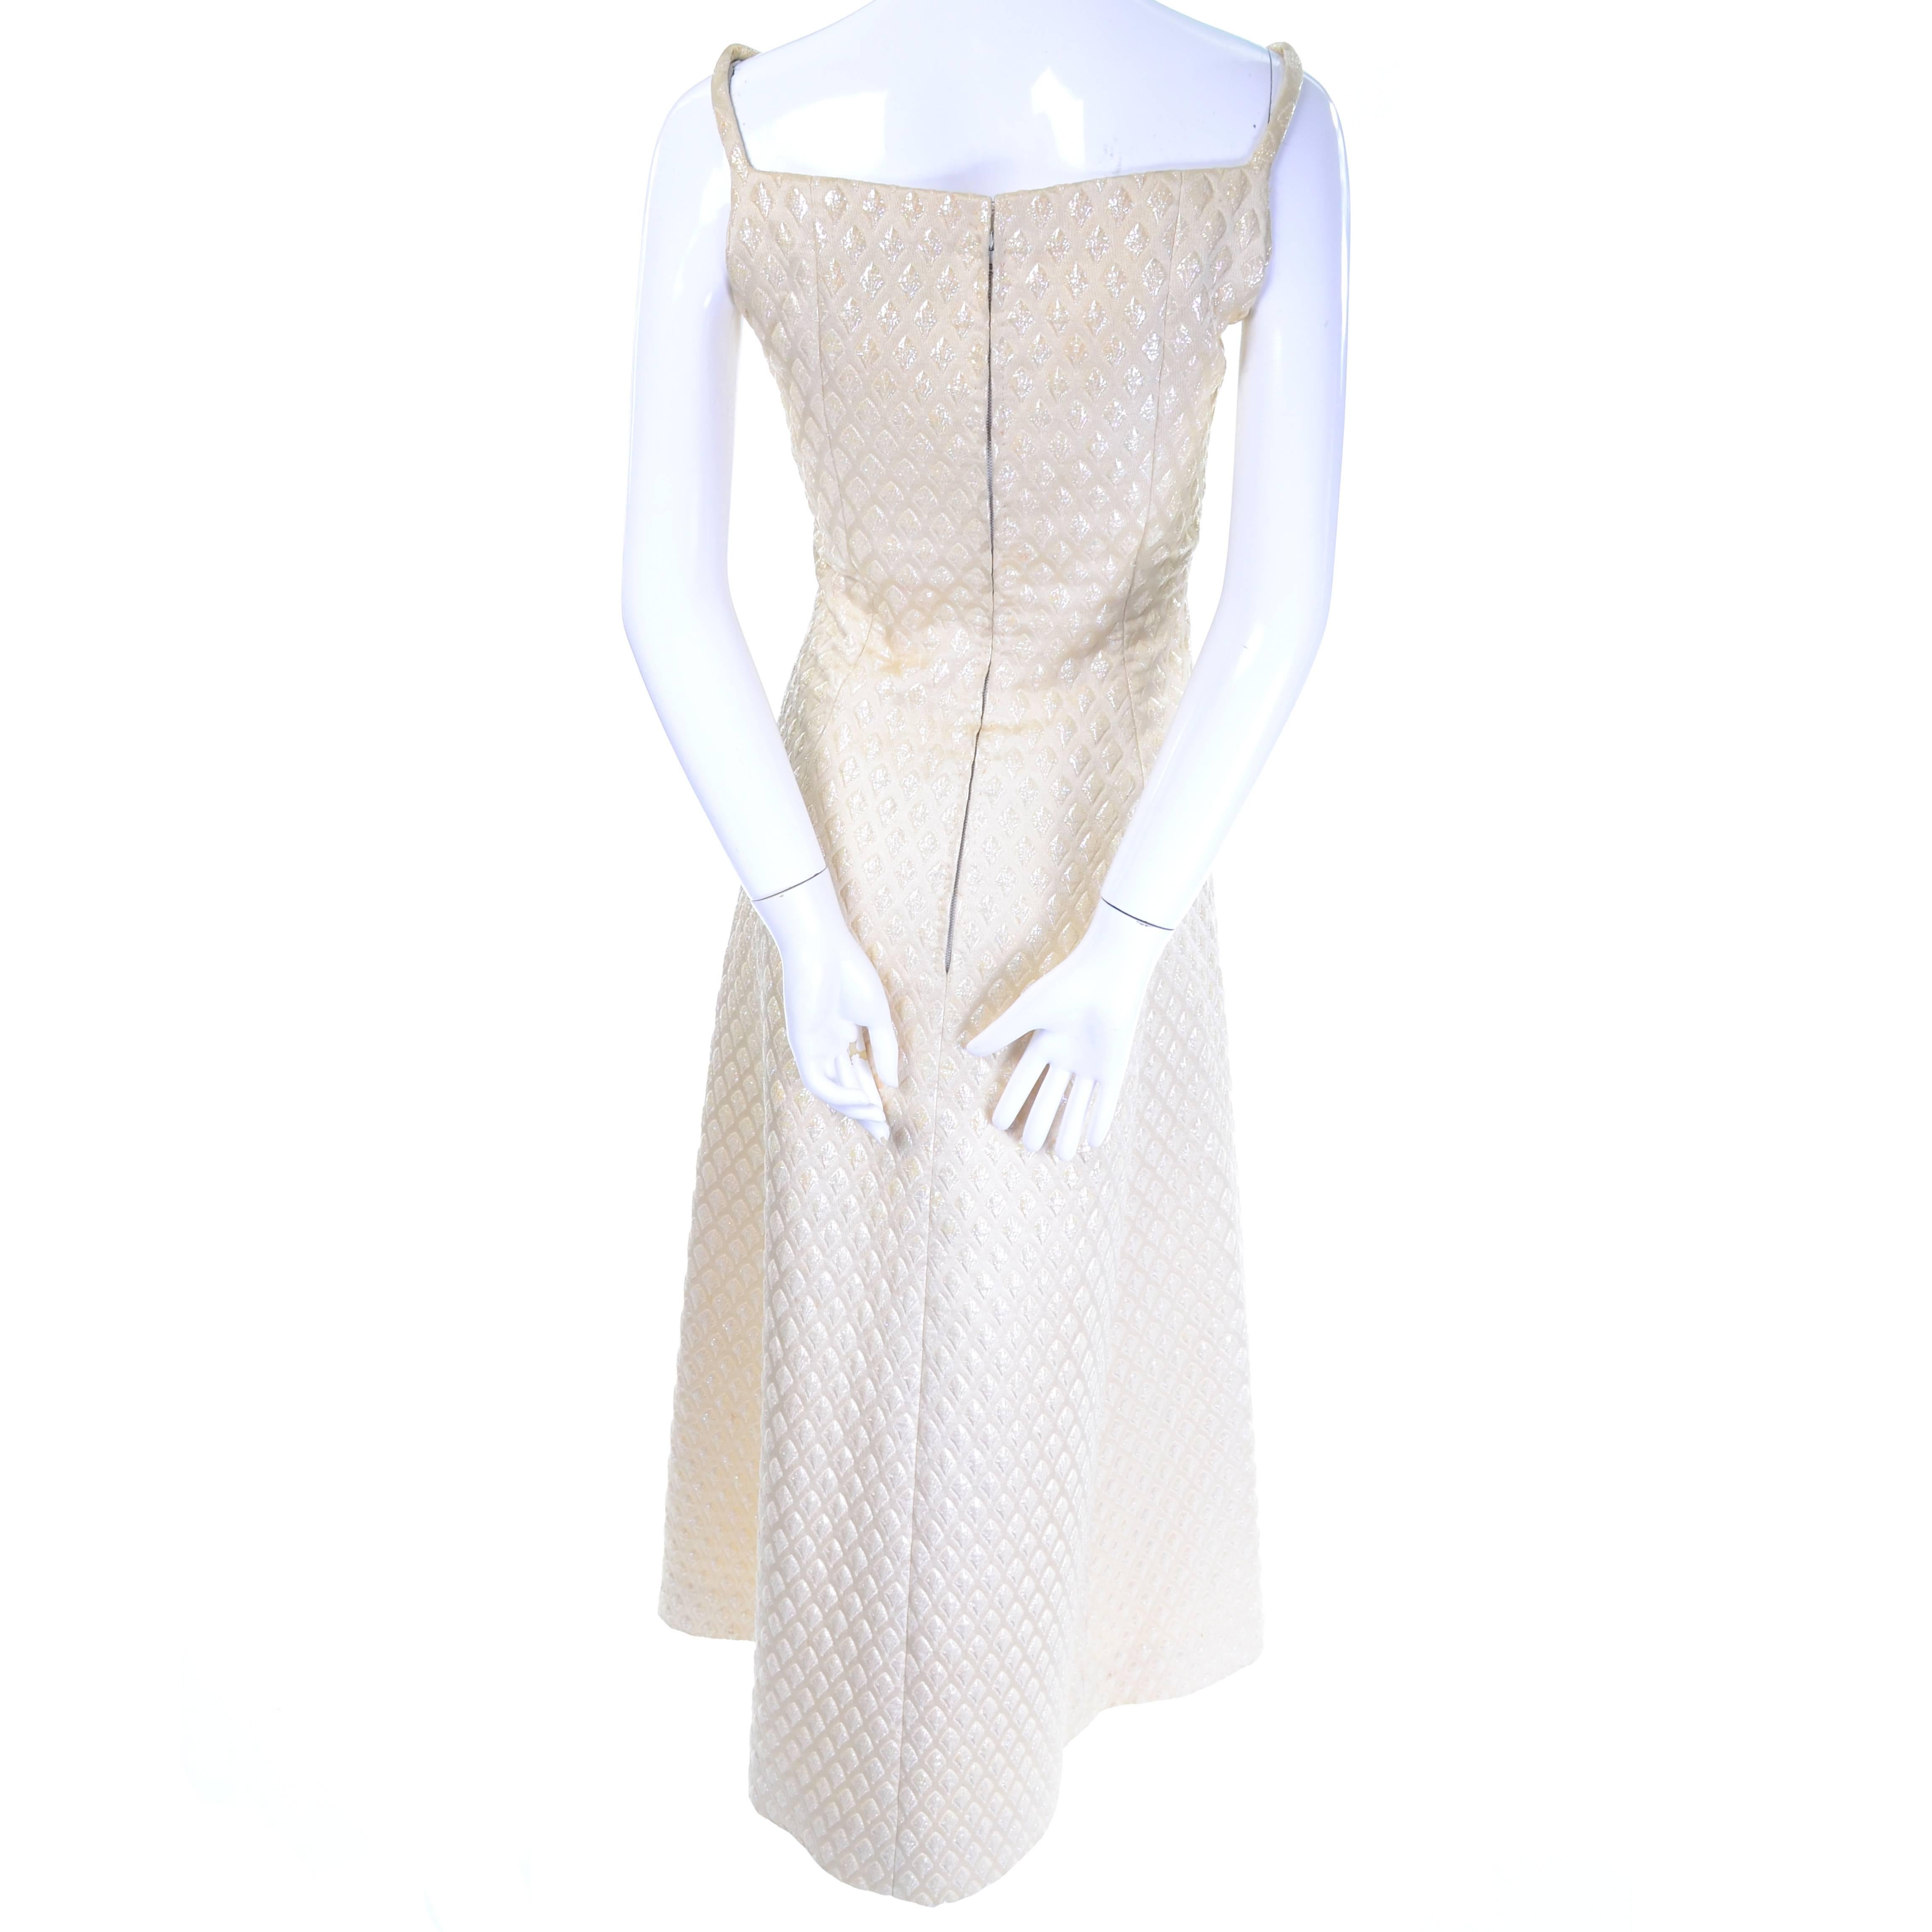 Beige 1960s Jacques Heim Vintage Dress Creamy Metallic Diamond Pattern Evening Gown